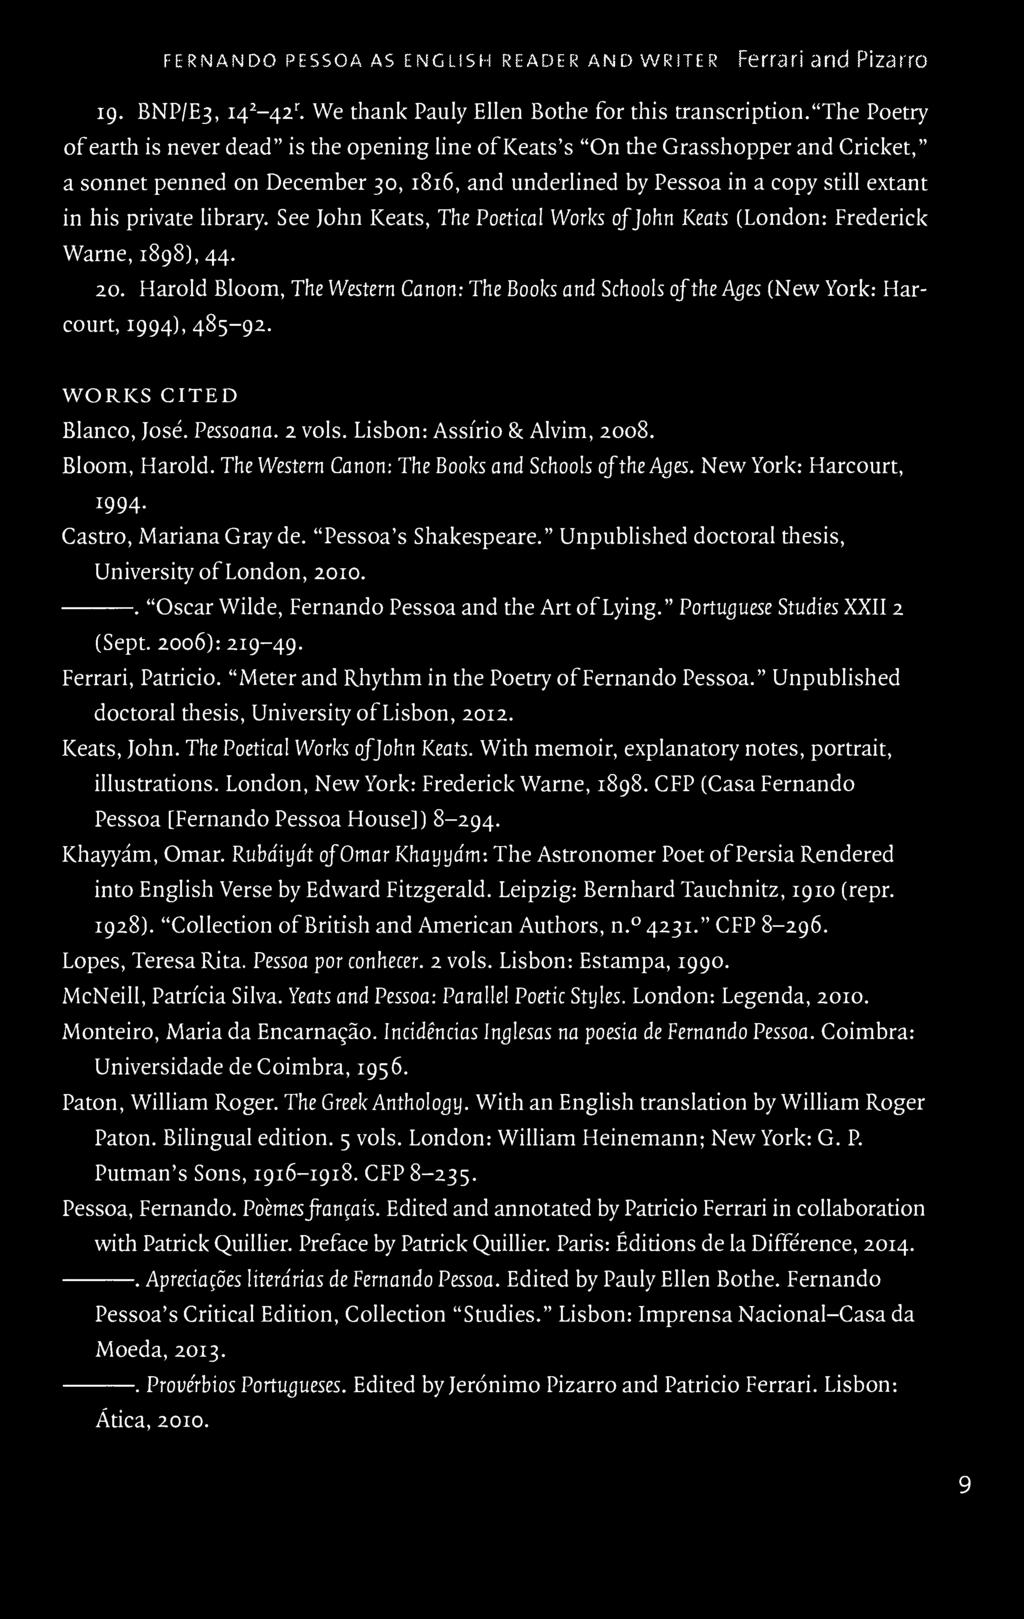 Pessoa s Shakespeare. Unpublished doctoral thesis, University of London, 2010.. Oscar Wilde, Fernando Pessoa and the Art of Lying. Portuguese Studies XXII (Sept. 2006): 219-49. Ferrari, Patricio.